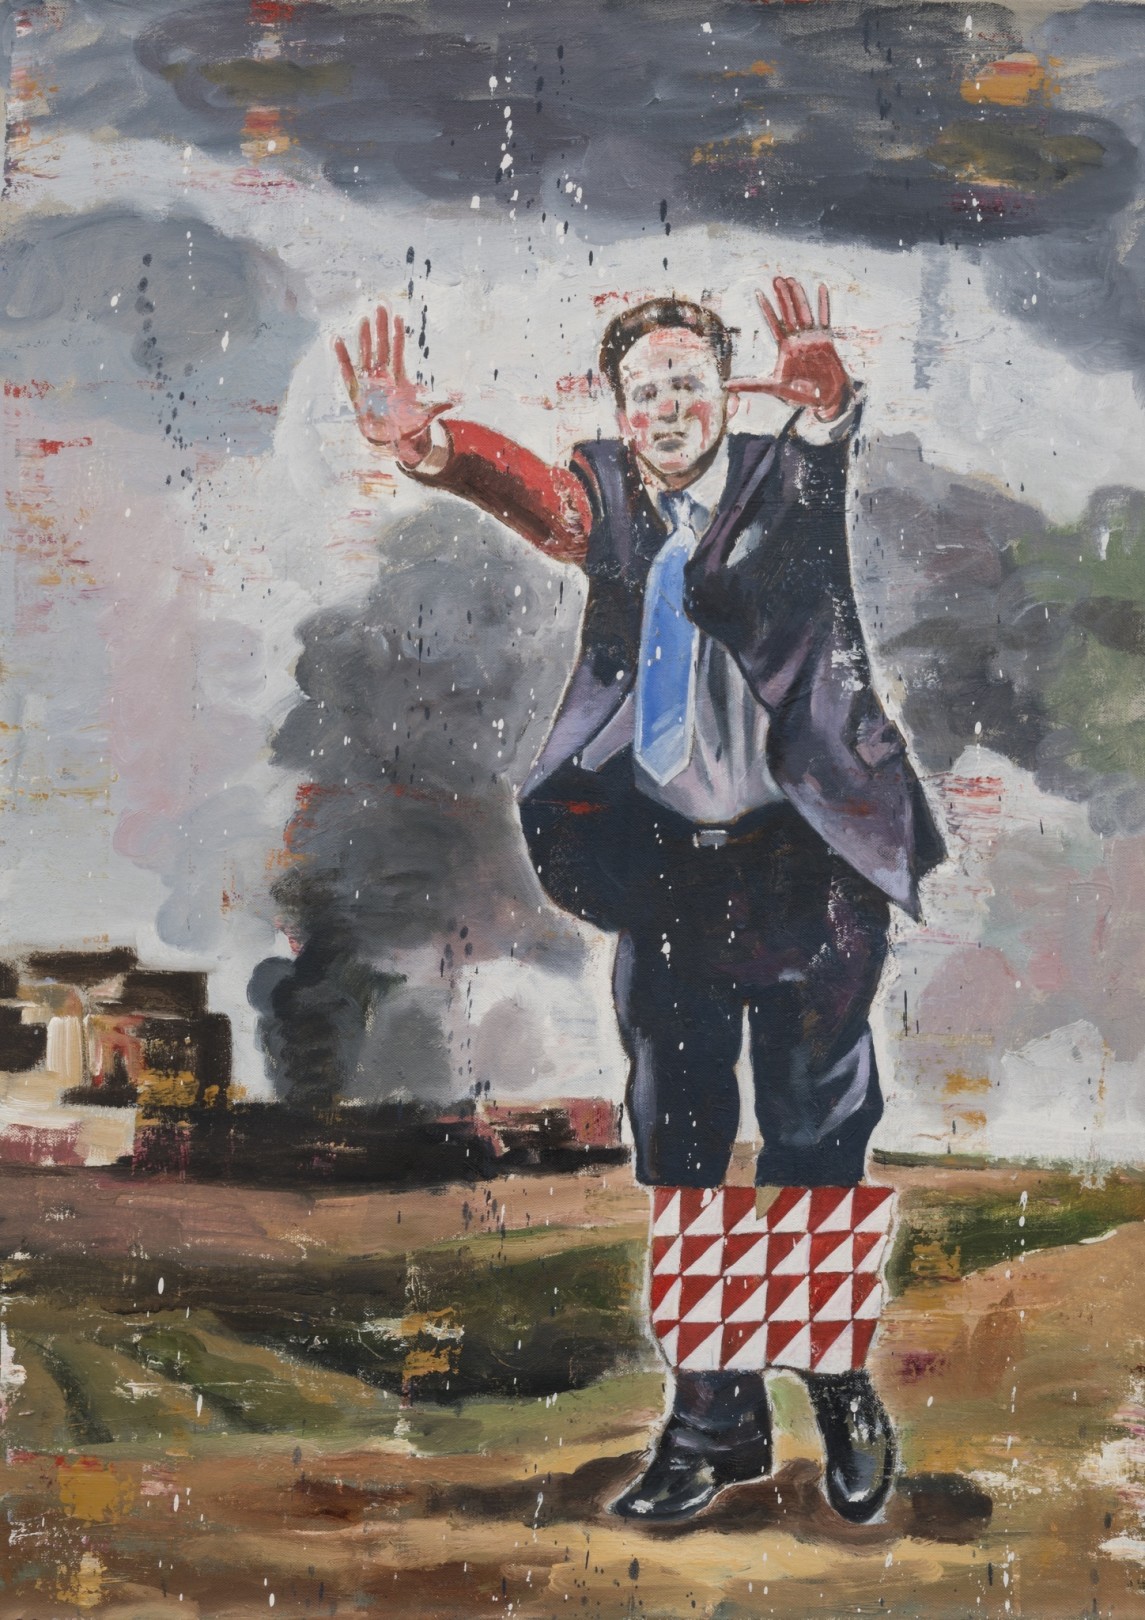 Nicky Nodjoumi Drunken man, 2015 Oil on canvas 71 x 50.8 cm. / 28 x 20 in.